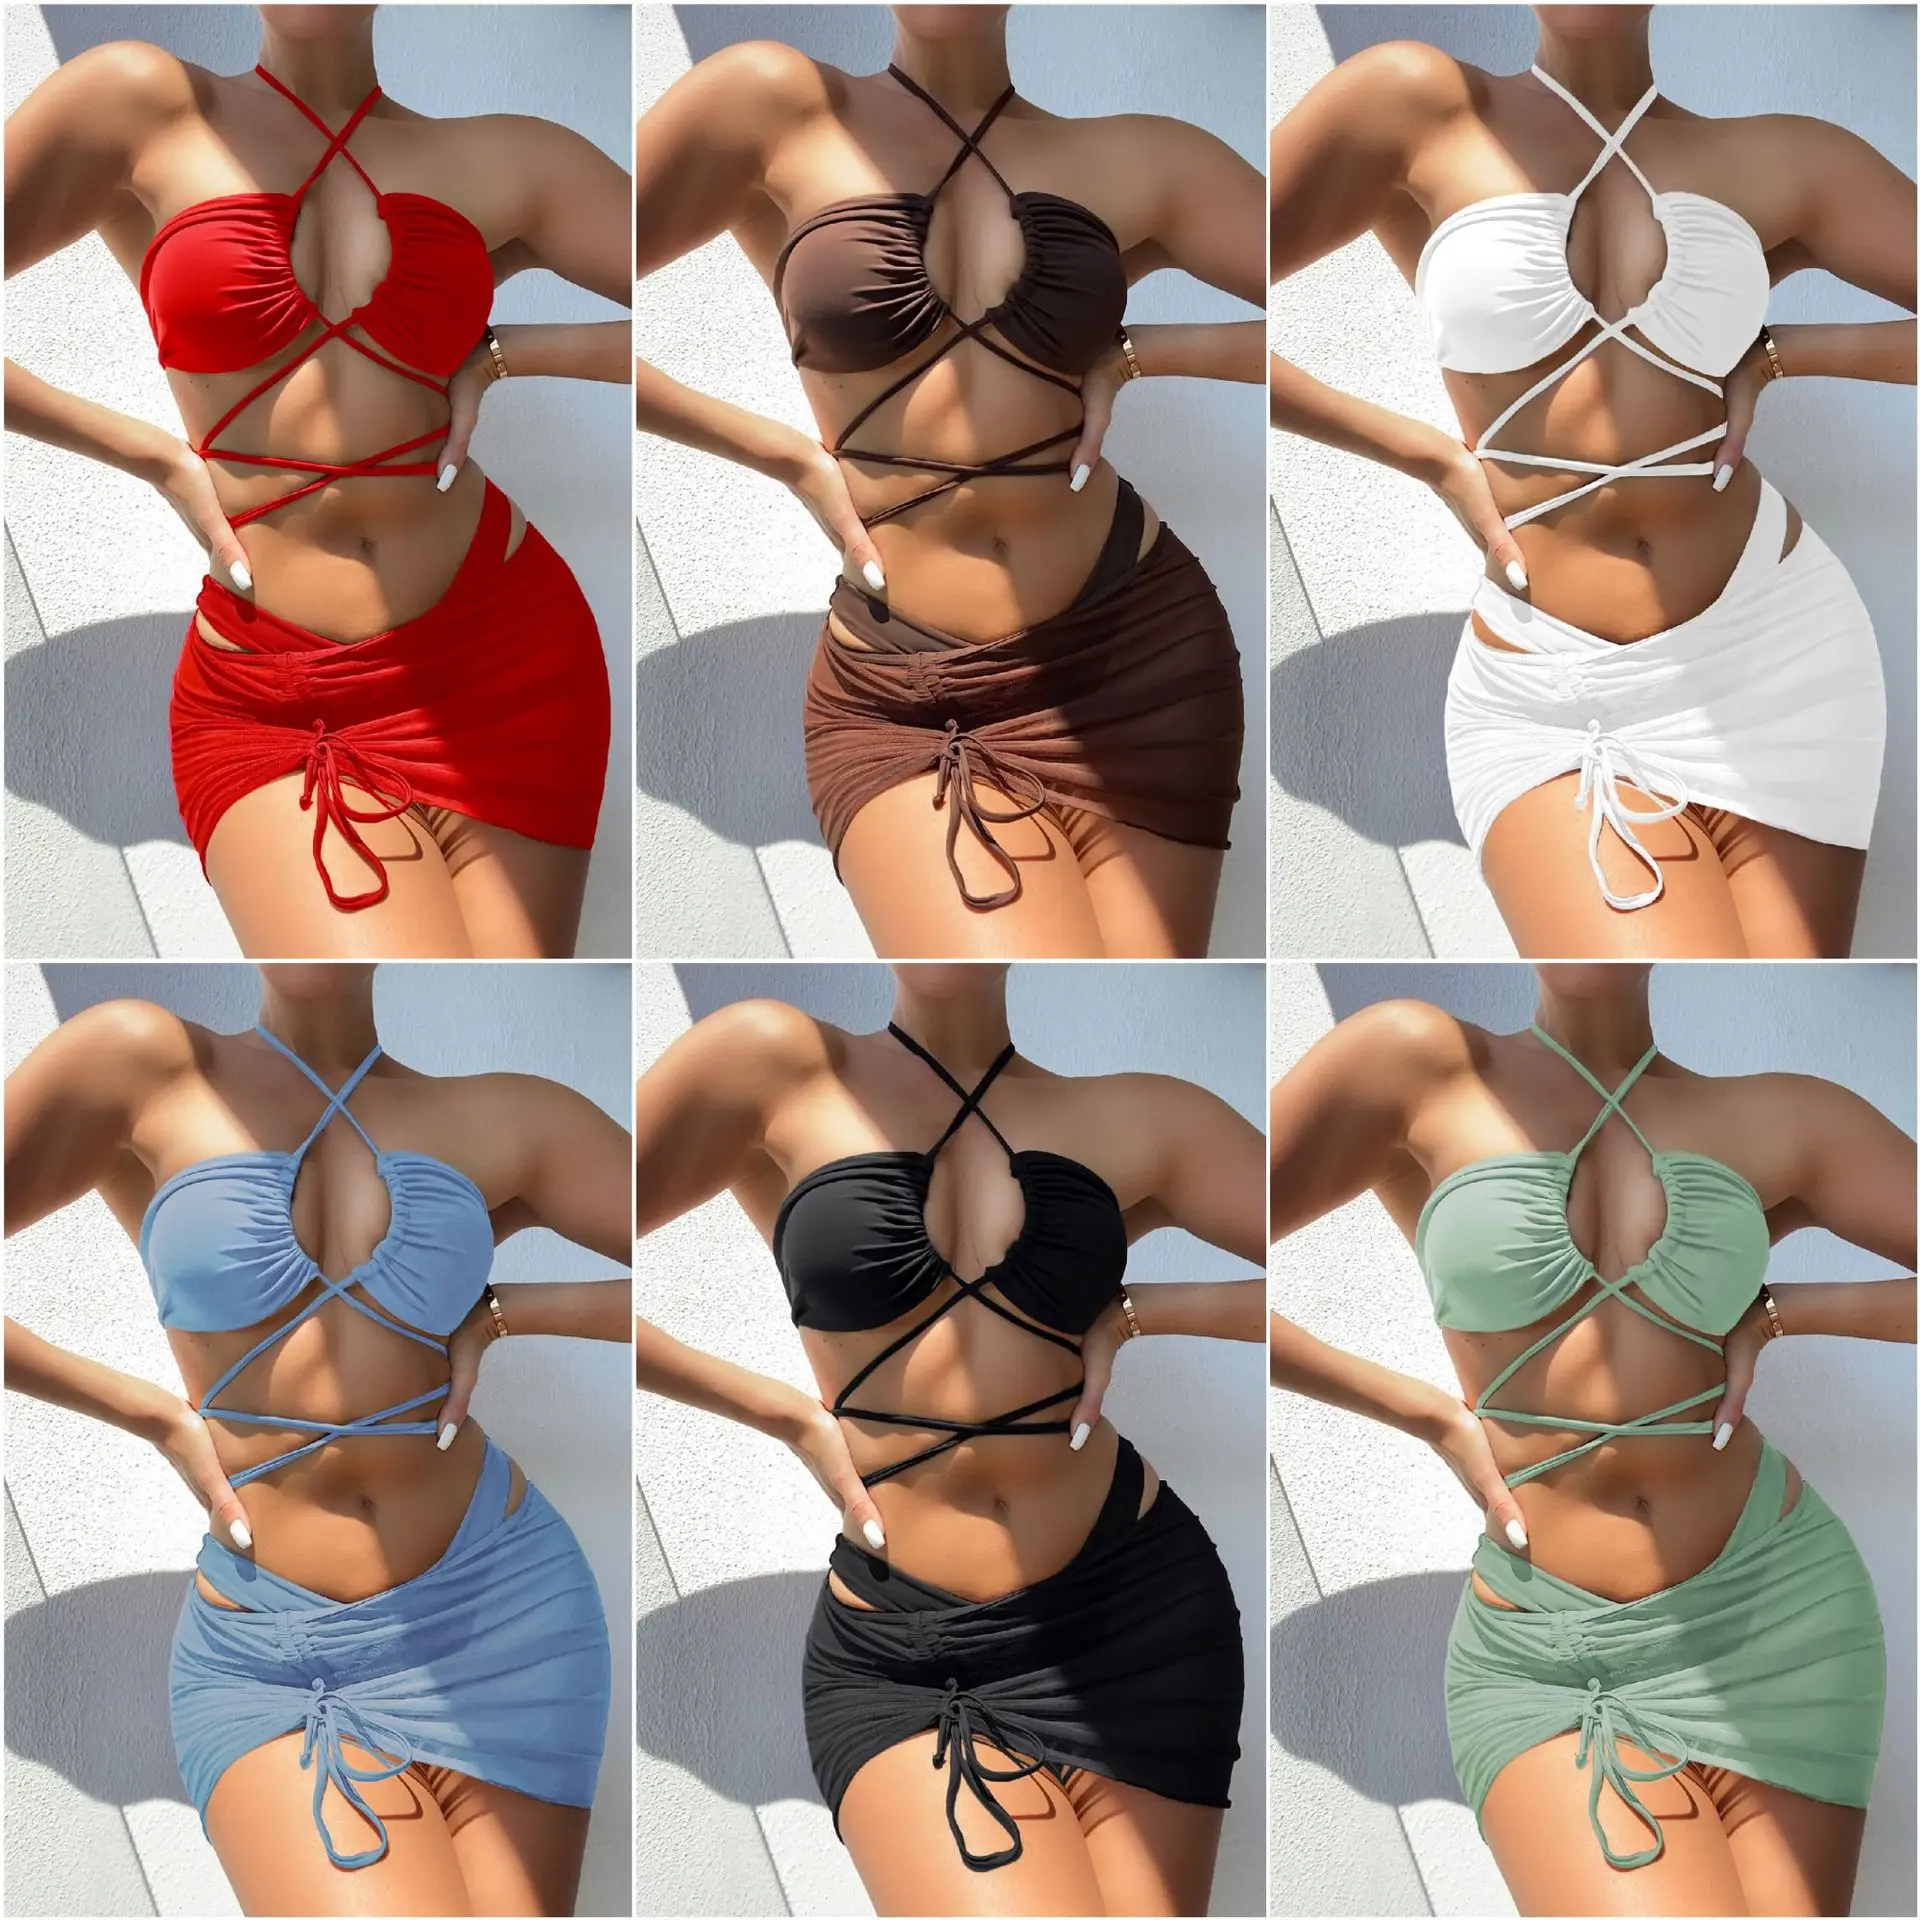 

Women New Bikini Sexy Triangle Adjust Swimwear Bathing Suit Swimsuit Female 3 Pieces Bikinis Set